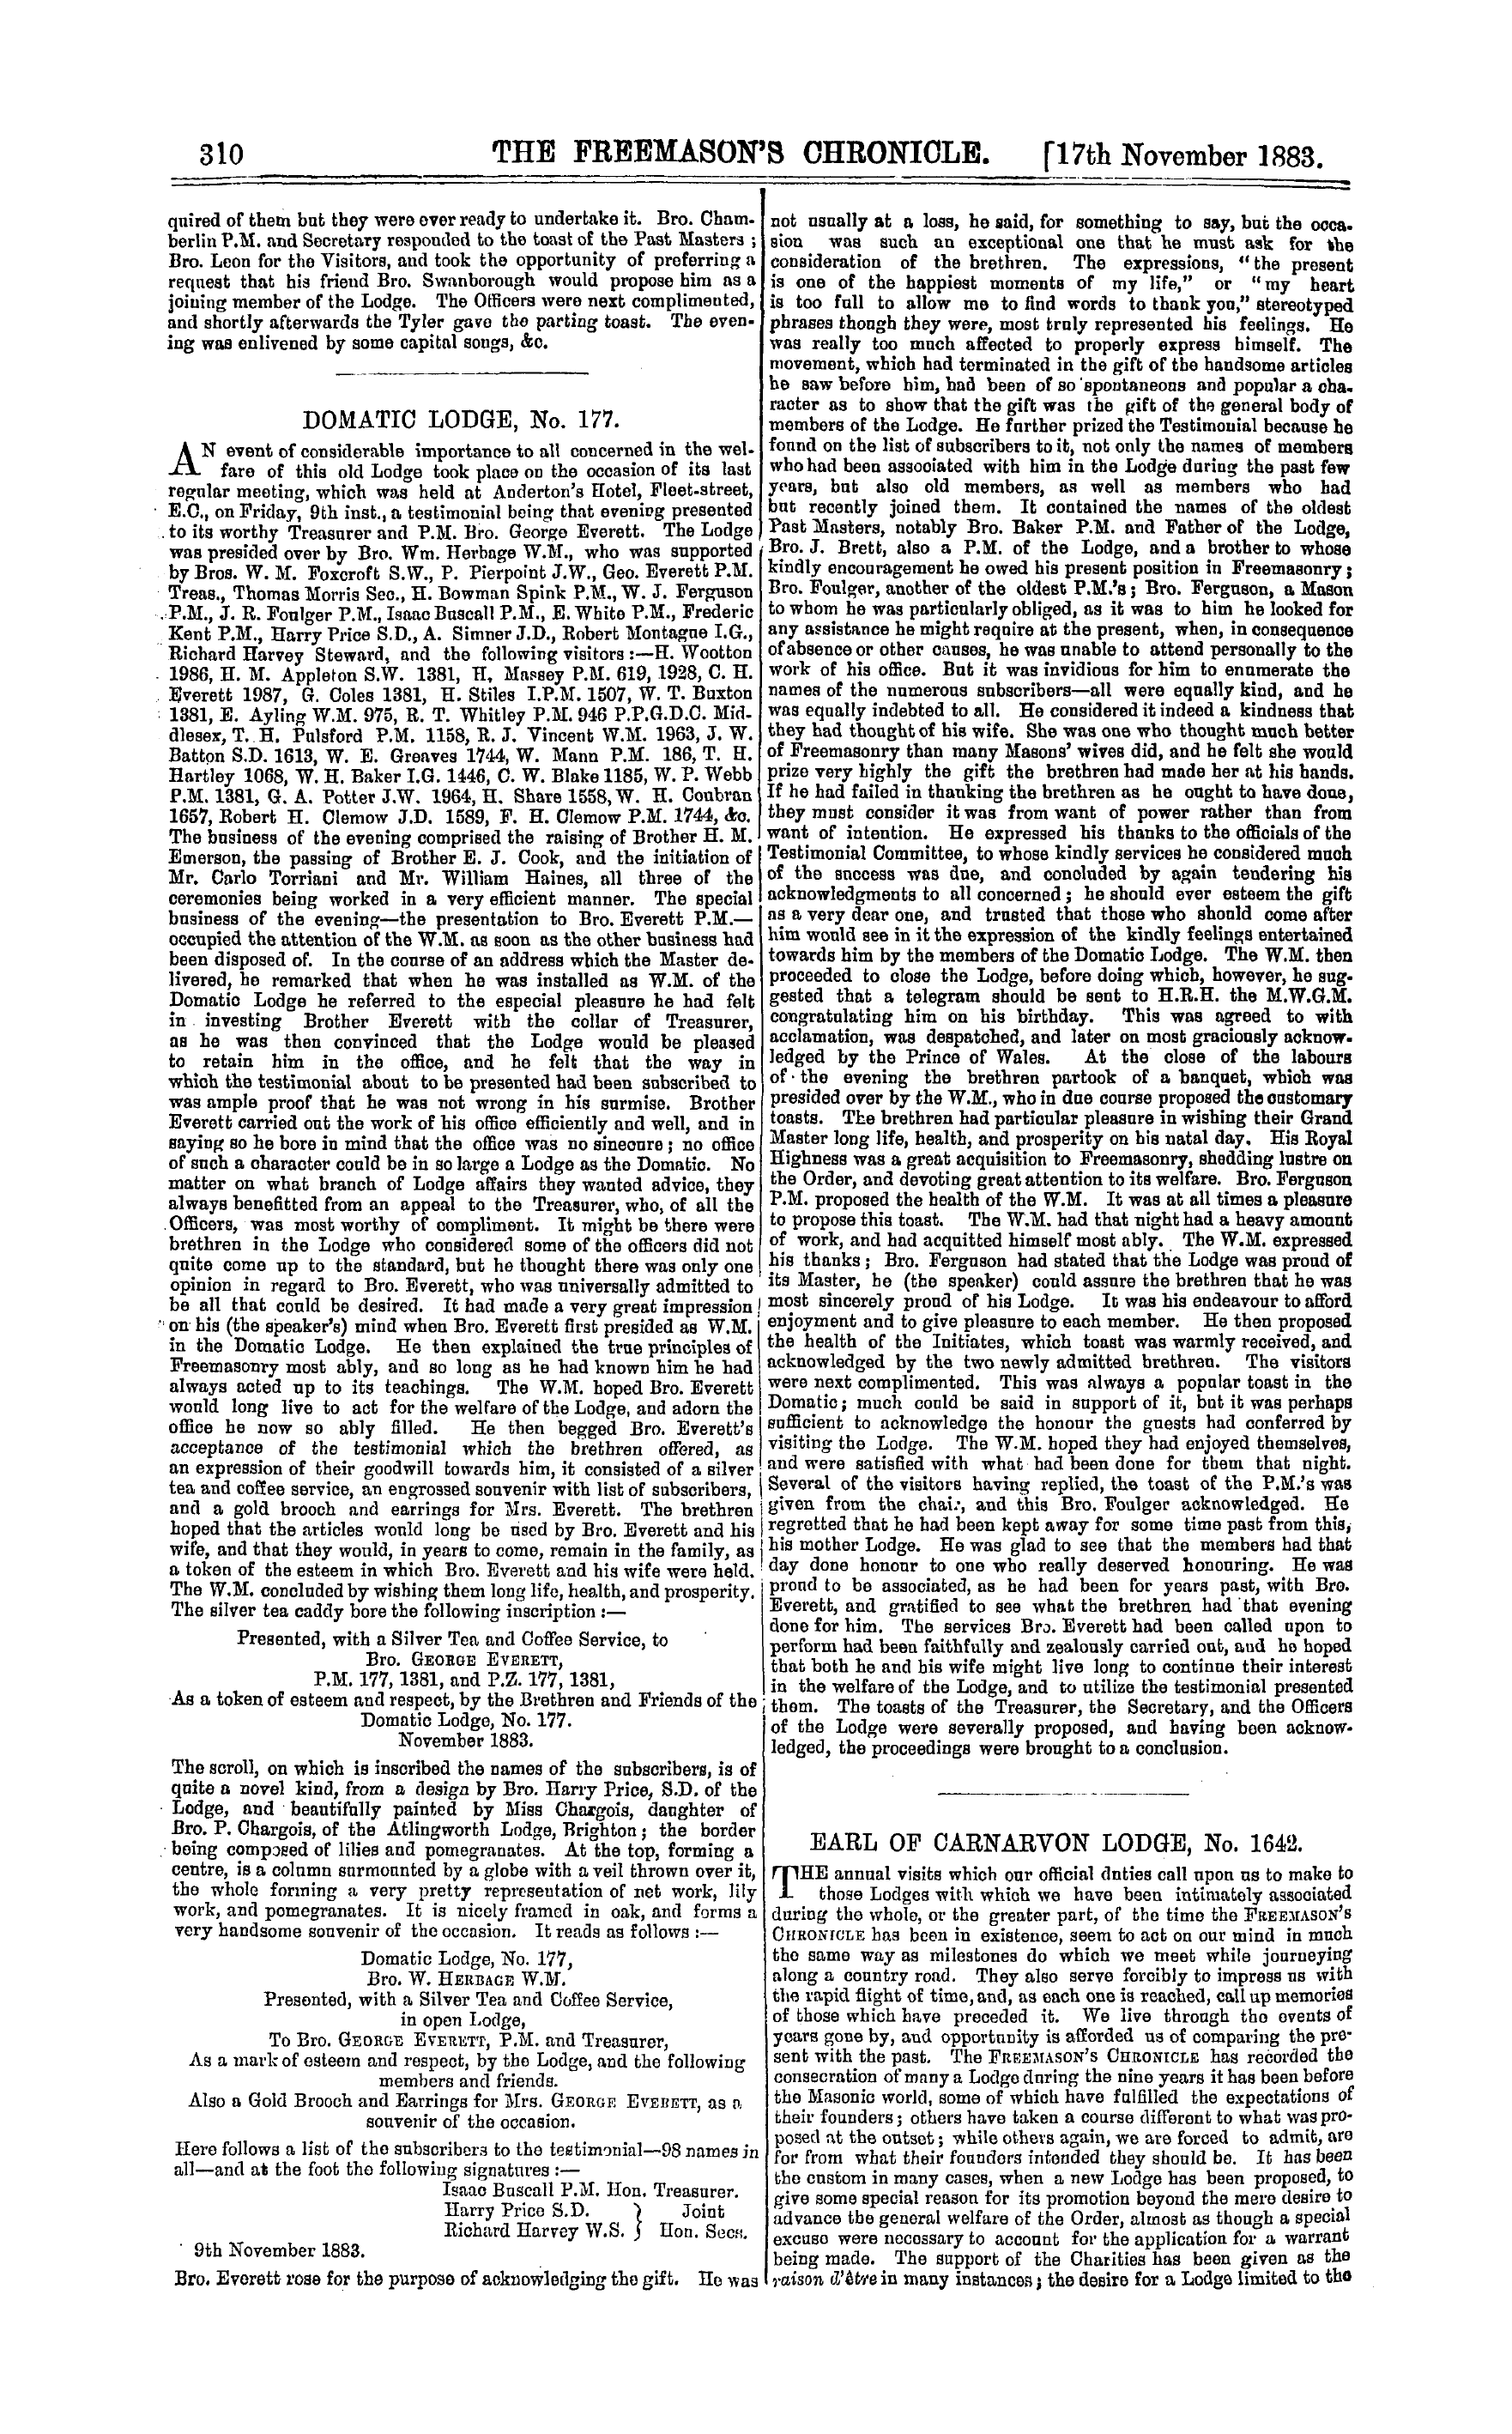 The Freemason's Chronicle: 1883-11-17 - Earl Of Carnarvon Lodge, No. 1642.